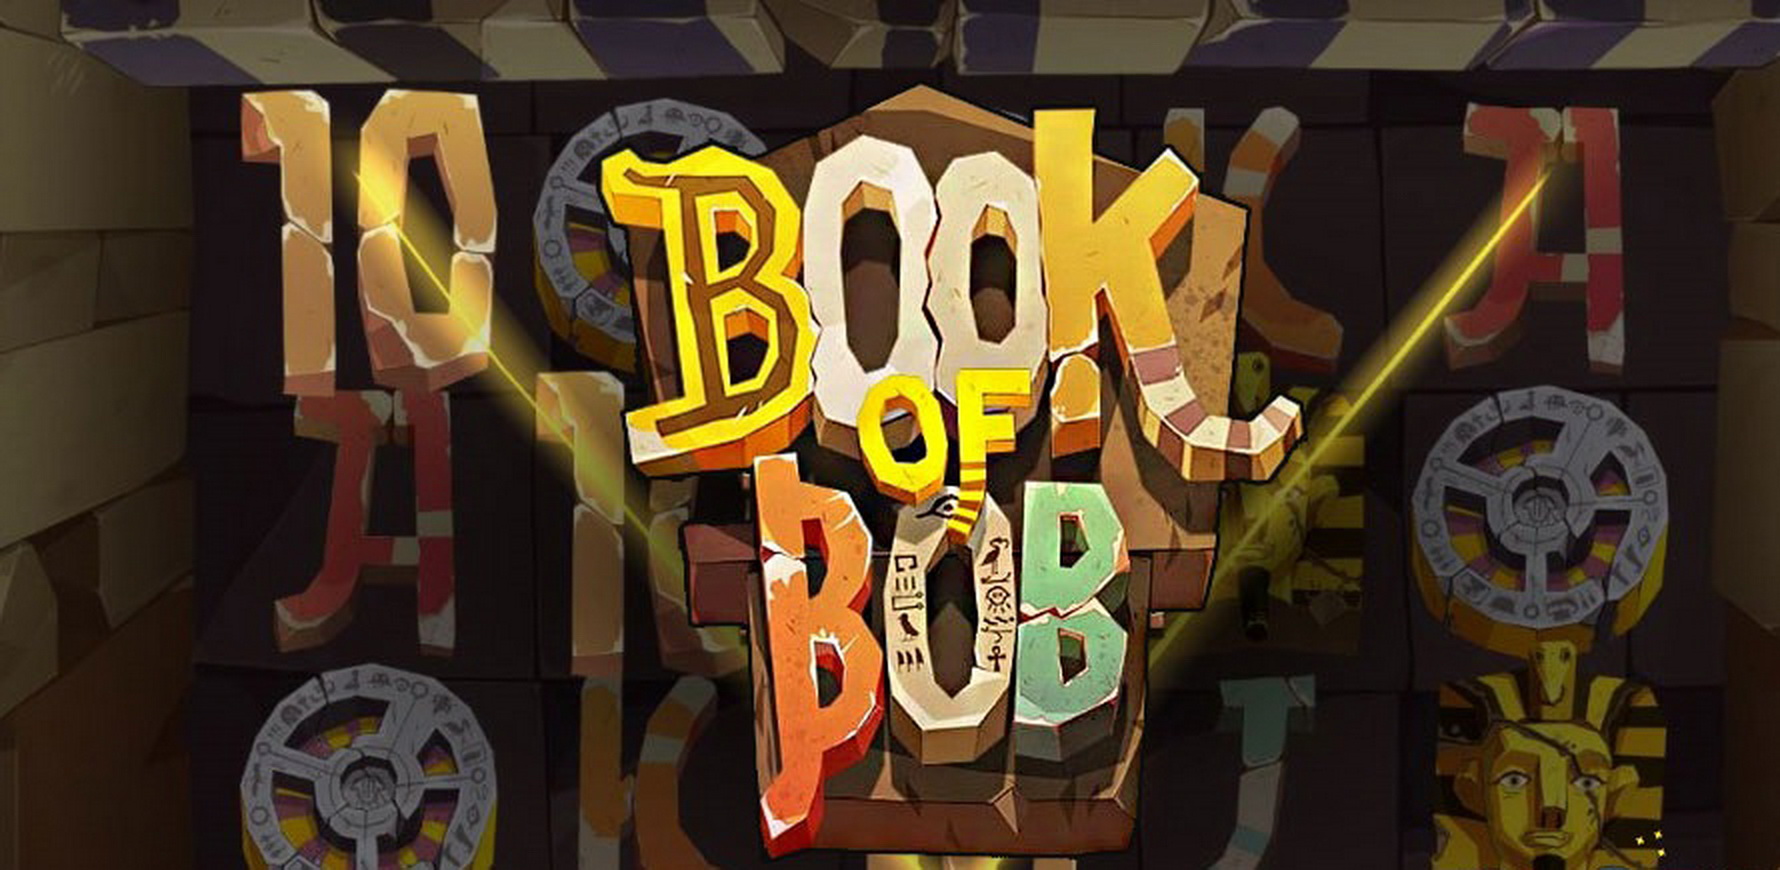 Book of Bob